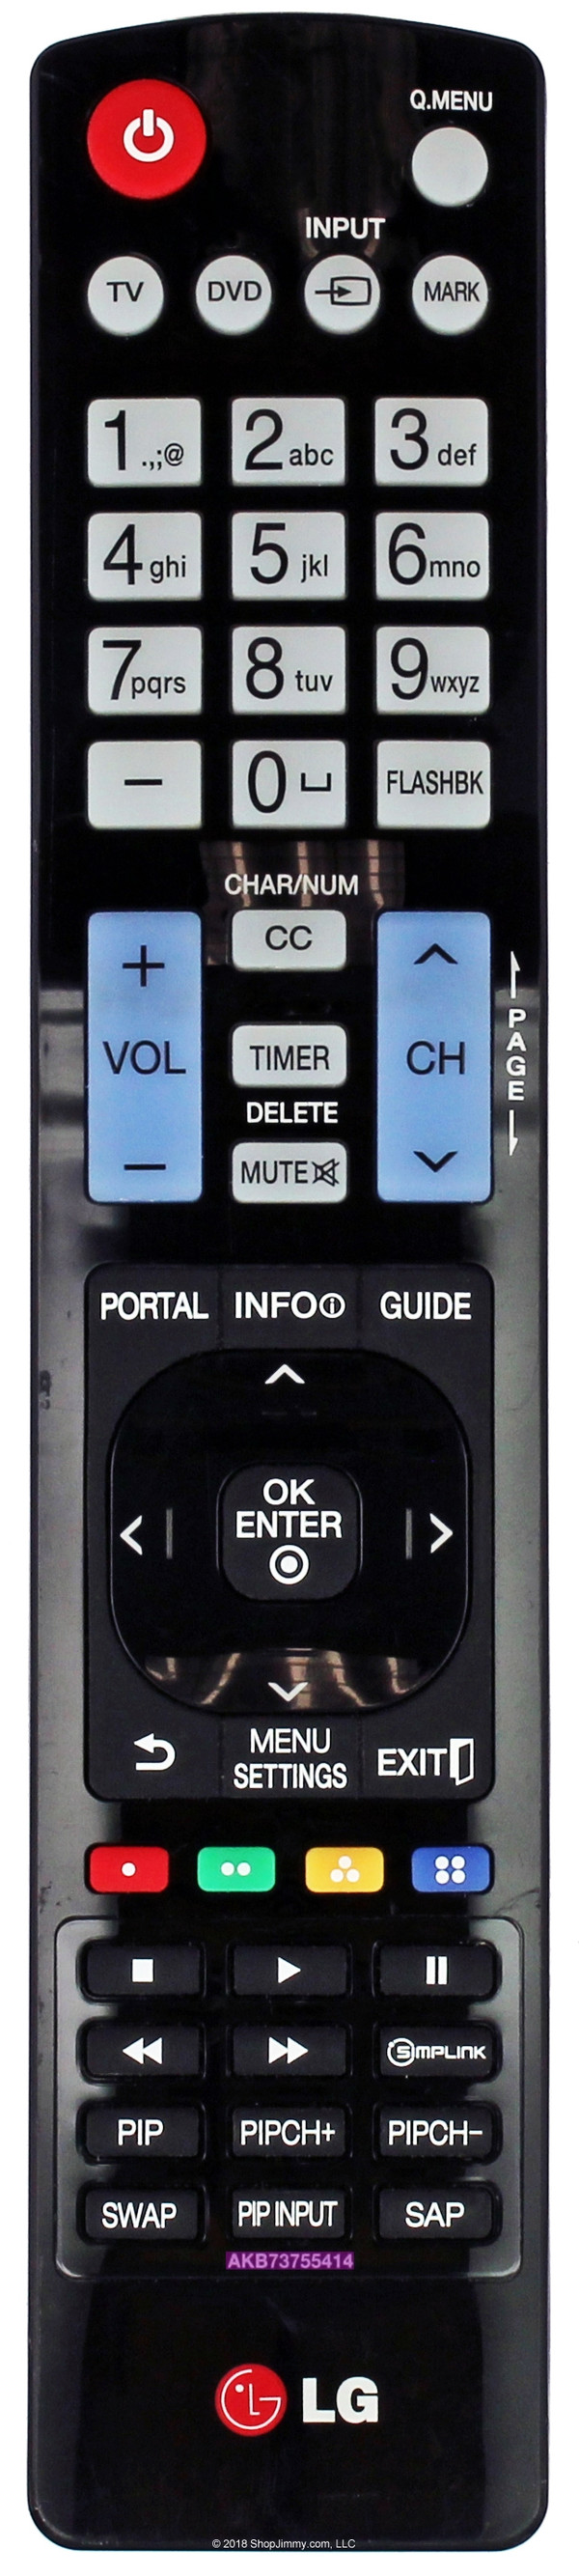 LG AKB73755414 Remote Control - Open Bag